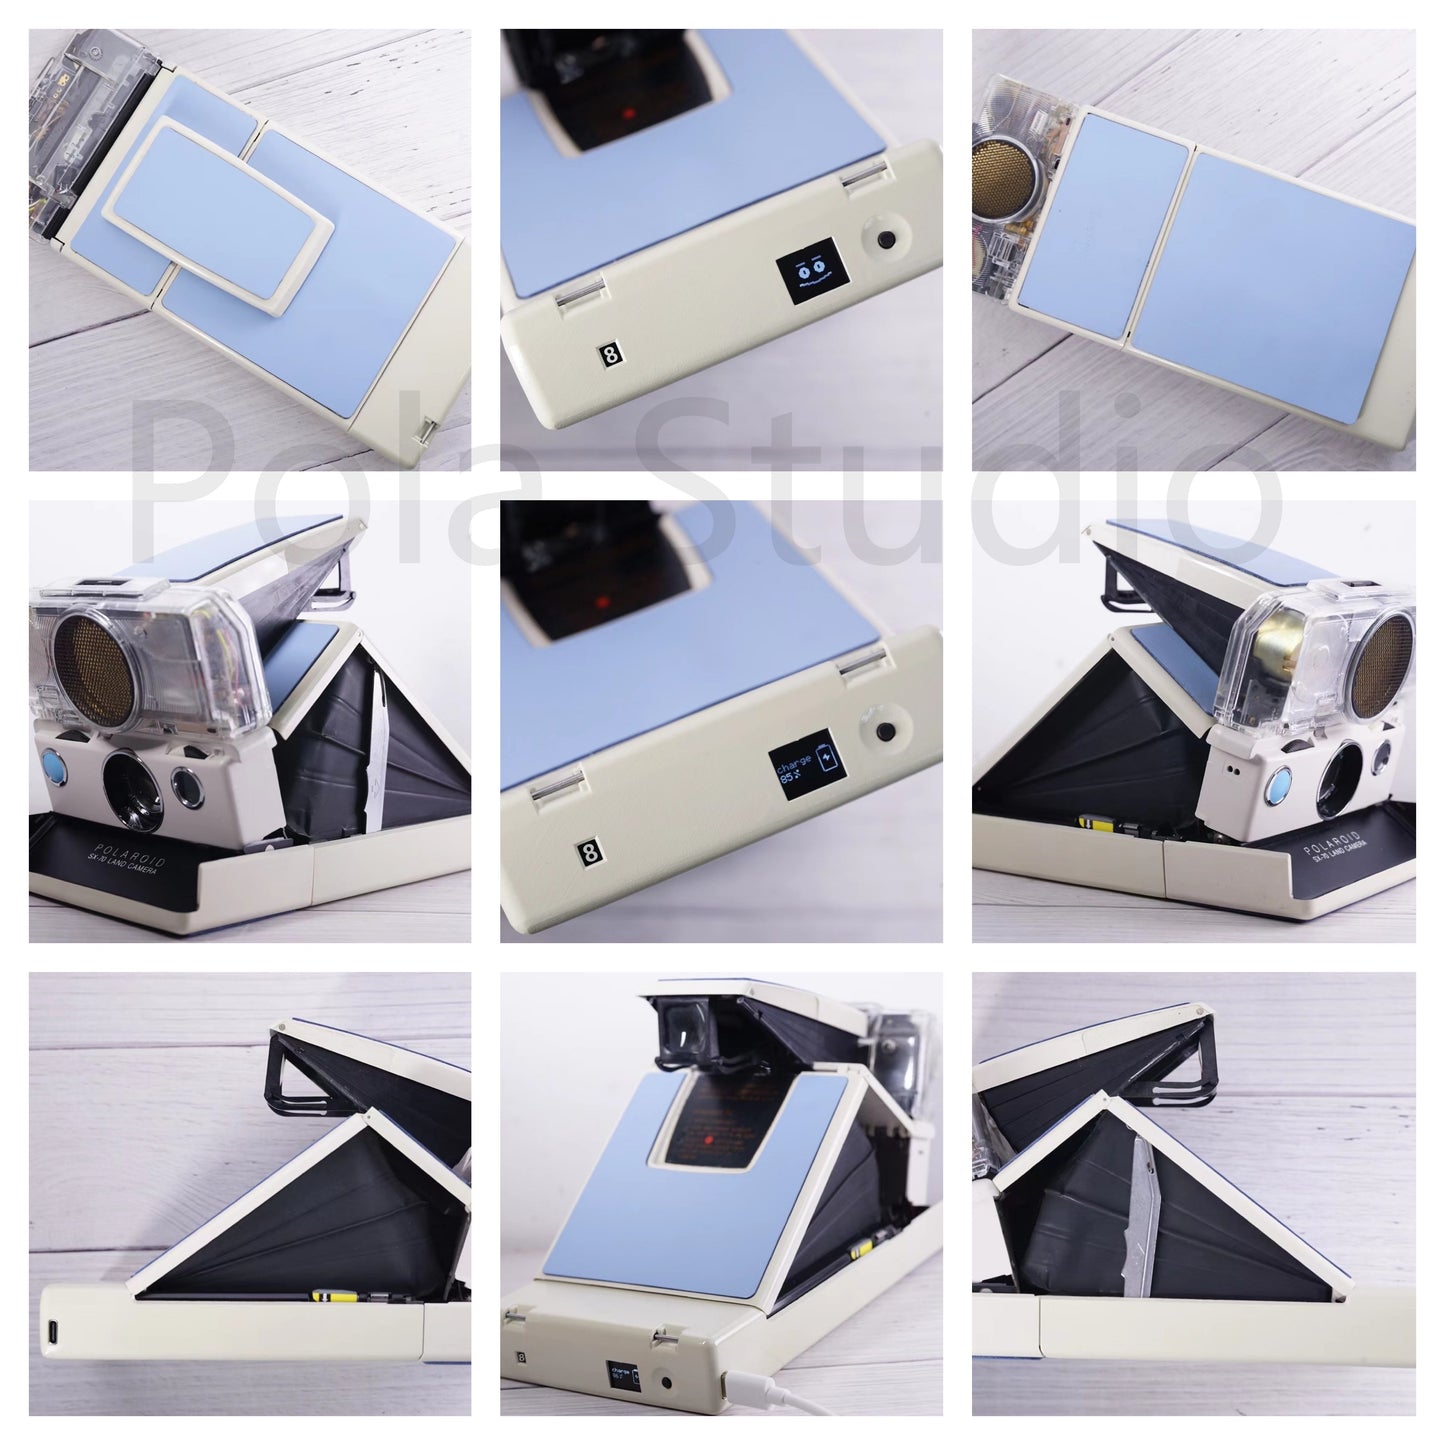 Pola Studio*Polaroid camera Power KIT adapter EVO ver OLED SCREEN SX70/SONAR/680/690